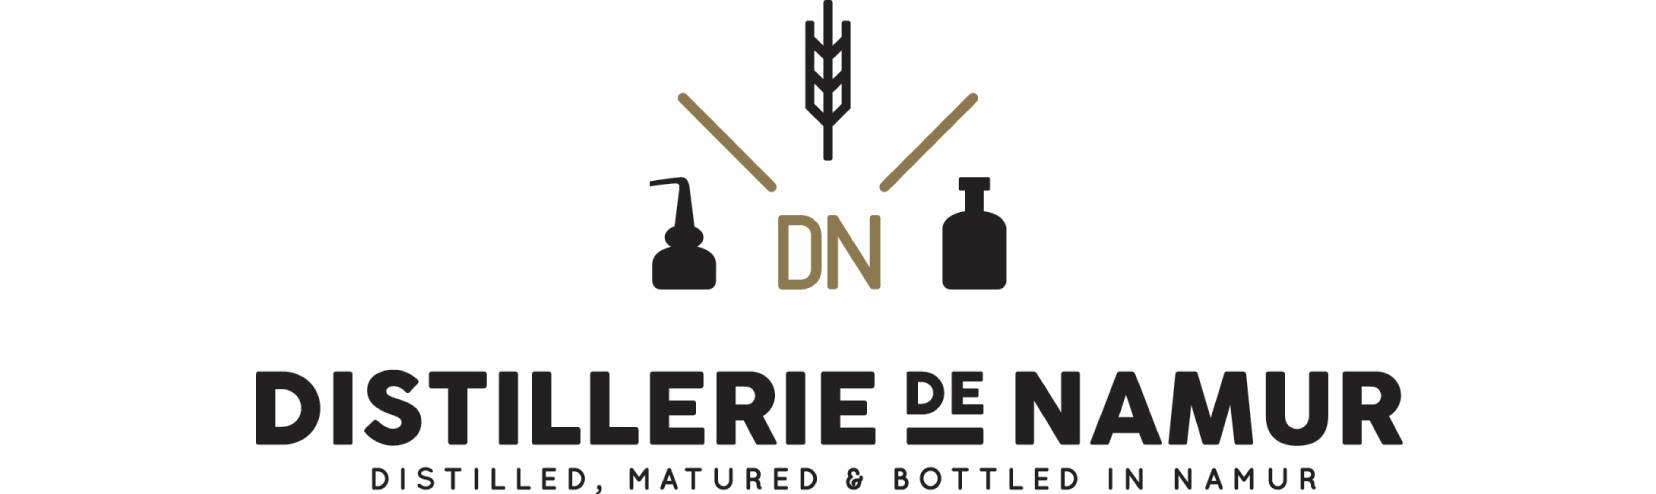 Distillerie de Namur